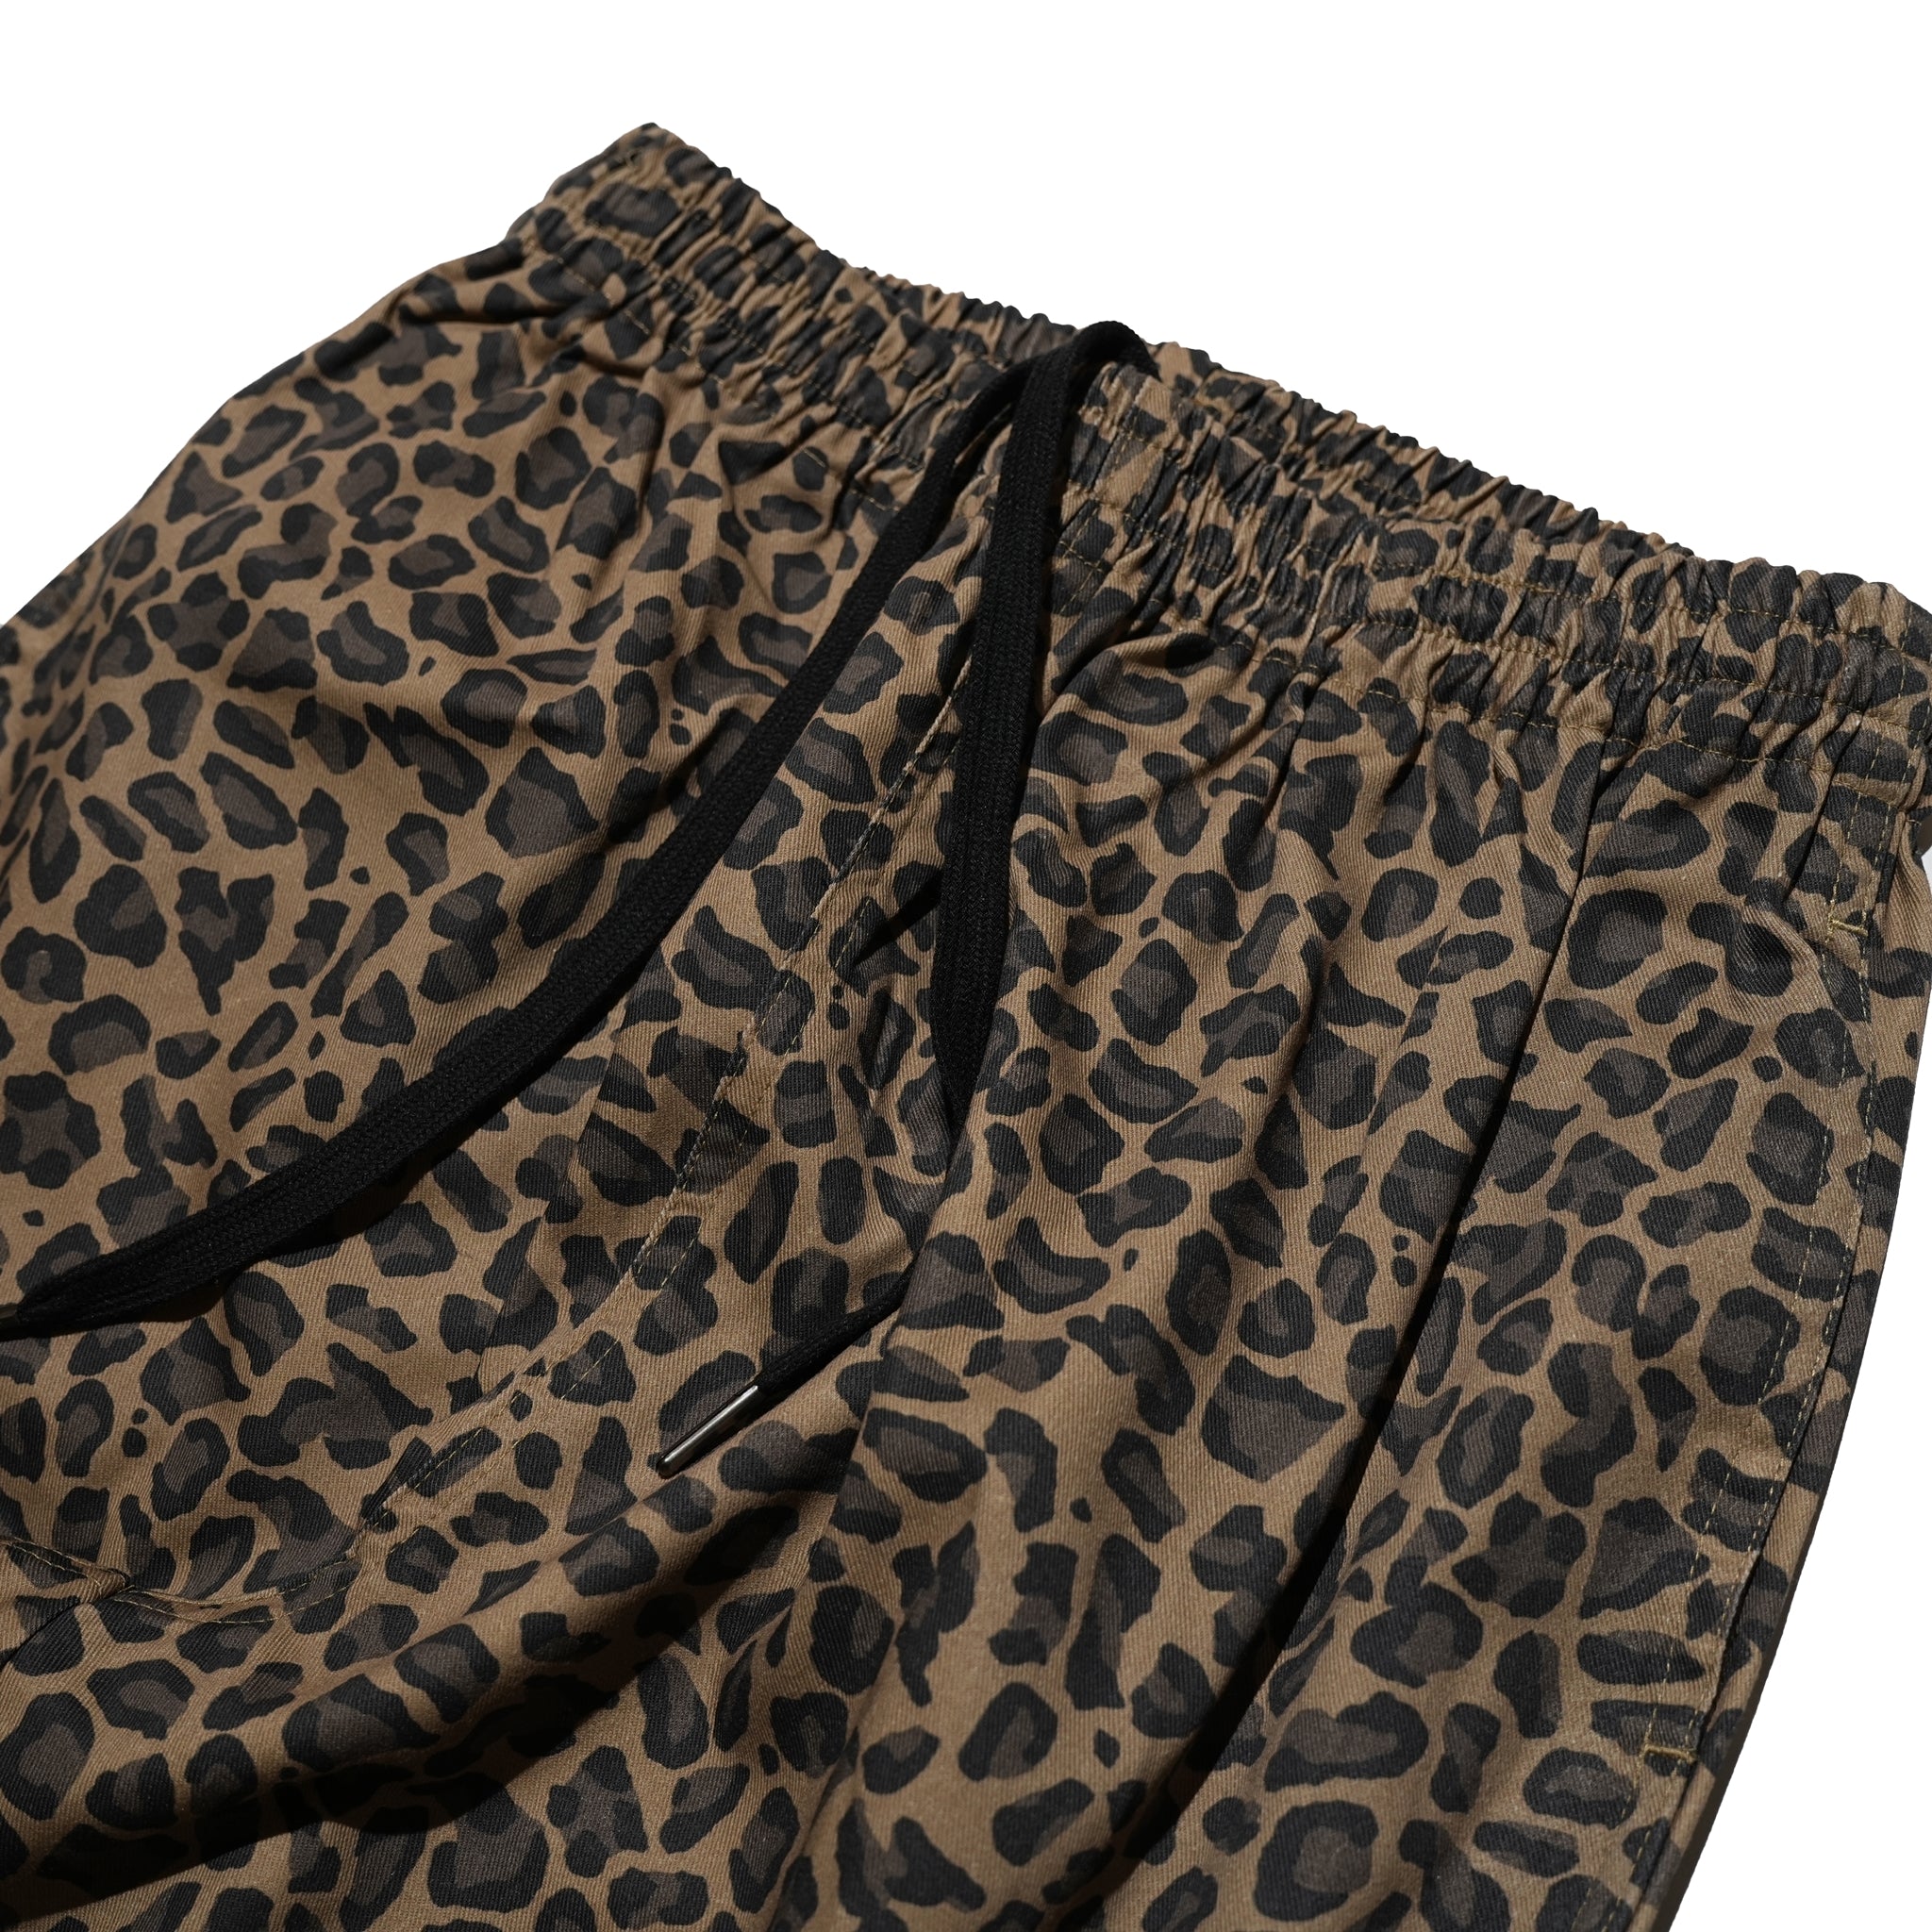 No:je082-144 | Name:ANIMAL SERIES-PANTS | Color:Cow/Leopard/Camo【JEMORGAN LONG JOHNS_ジェーイーモーガンロングジョーンズ】